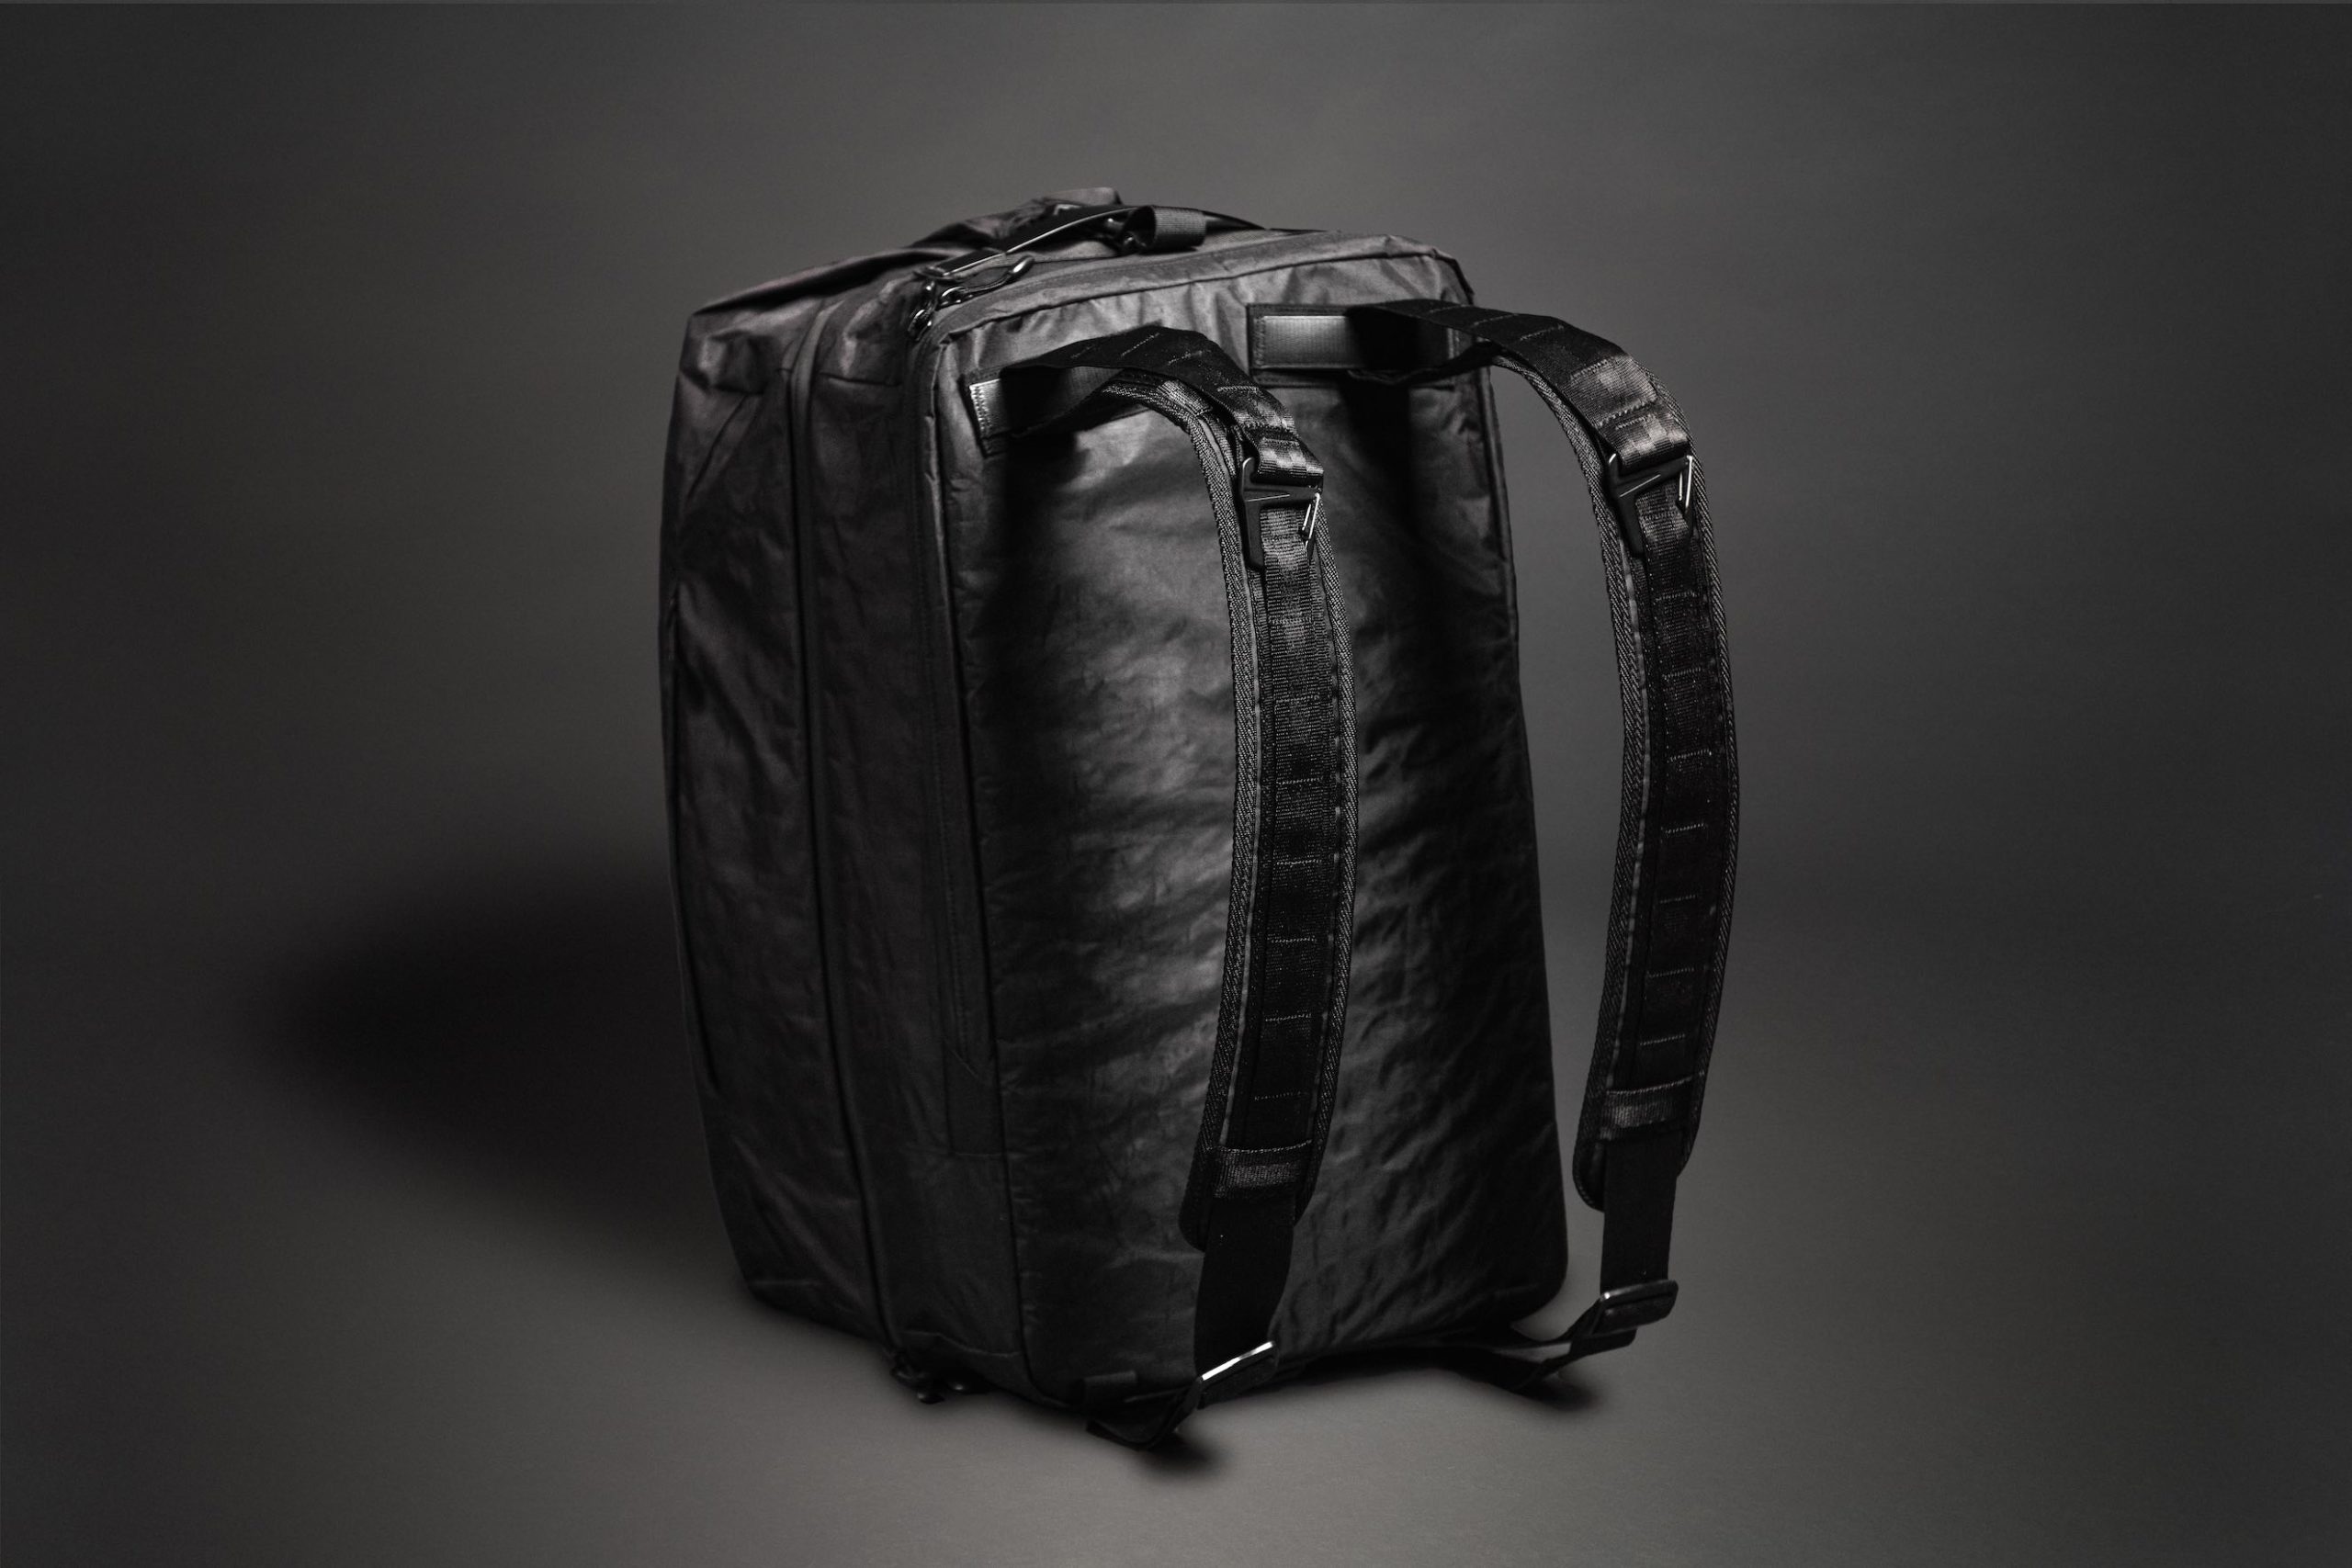 Black Mile Travel Bag Product Photography Black backpack on display